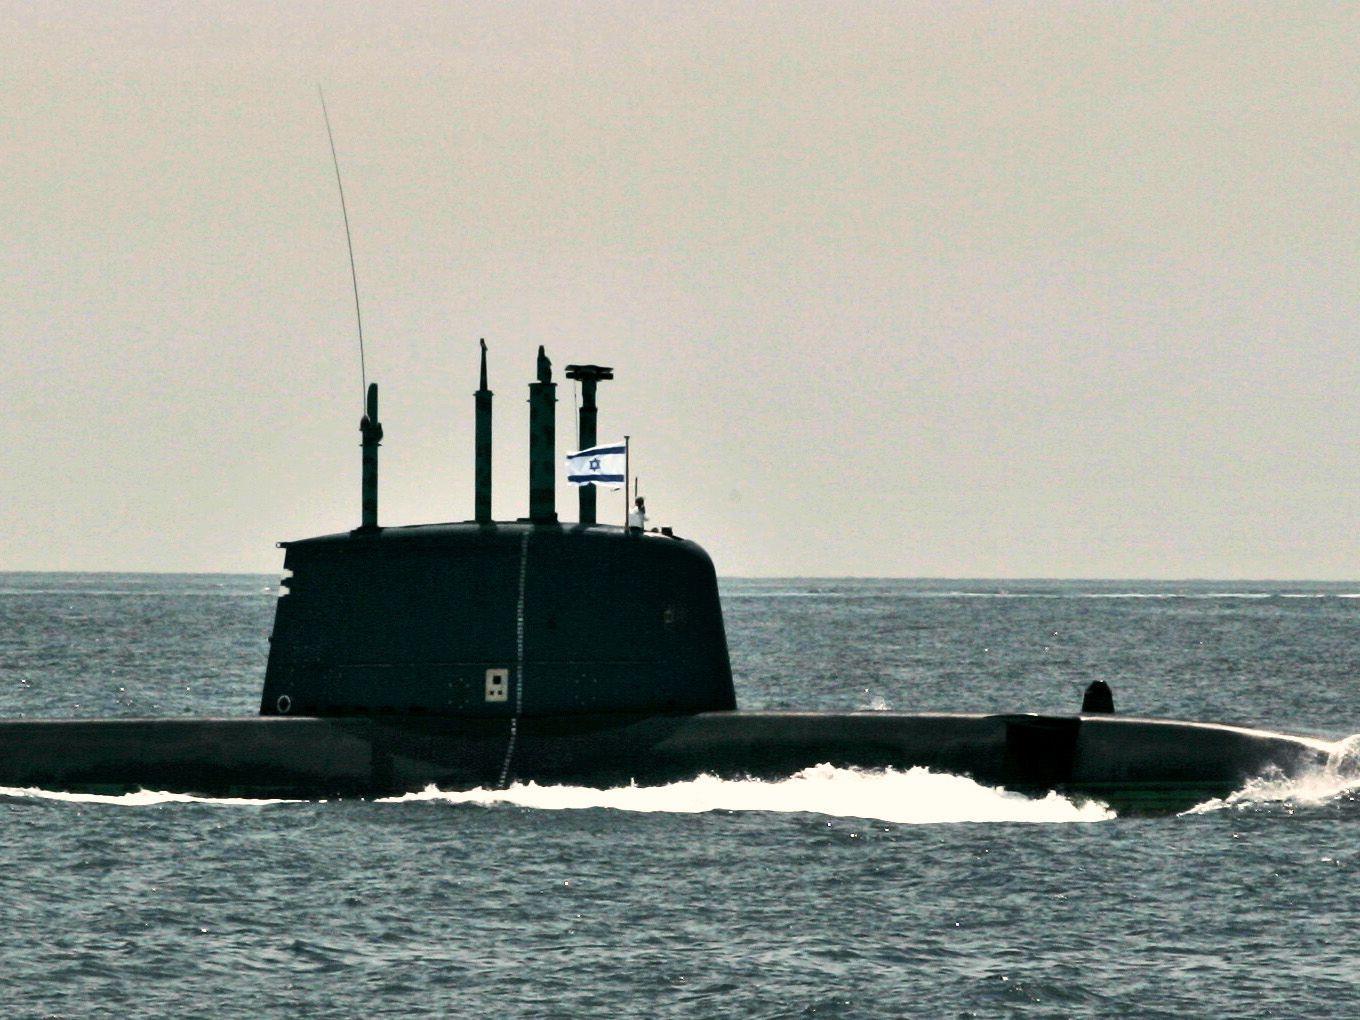 Drei "Dolphin"-Klasse U-Boote hat Israel bereits, drei weitere sollen folgen.